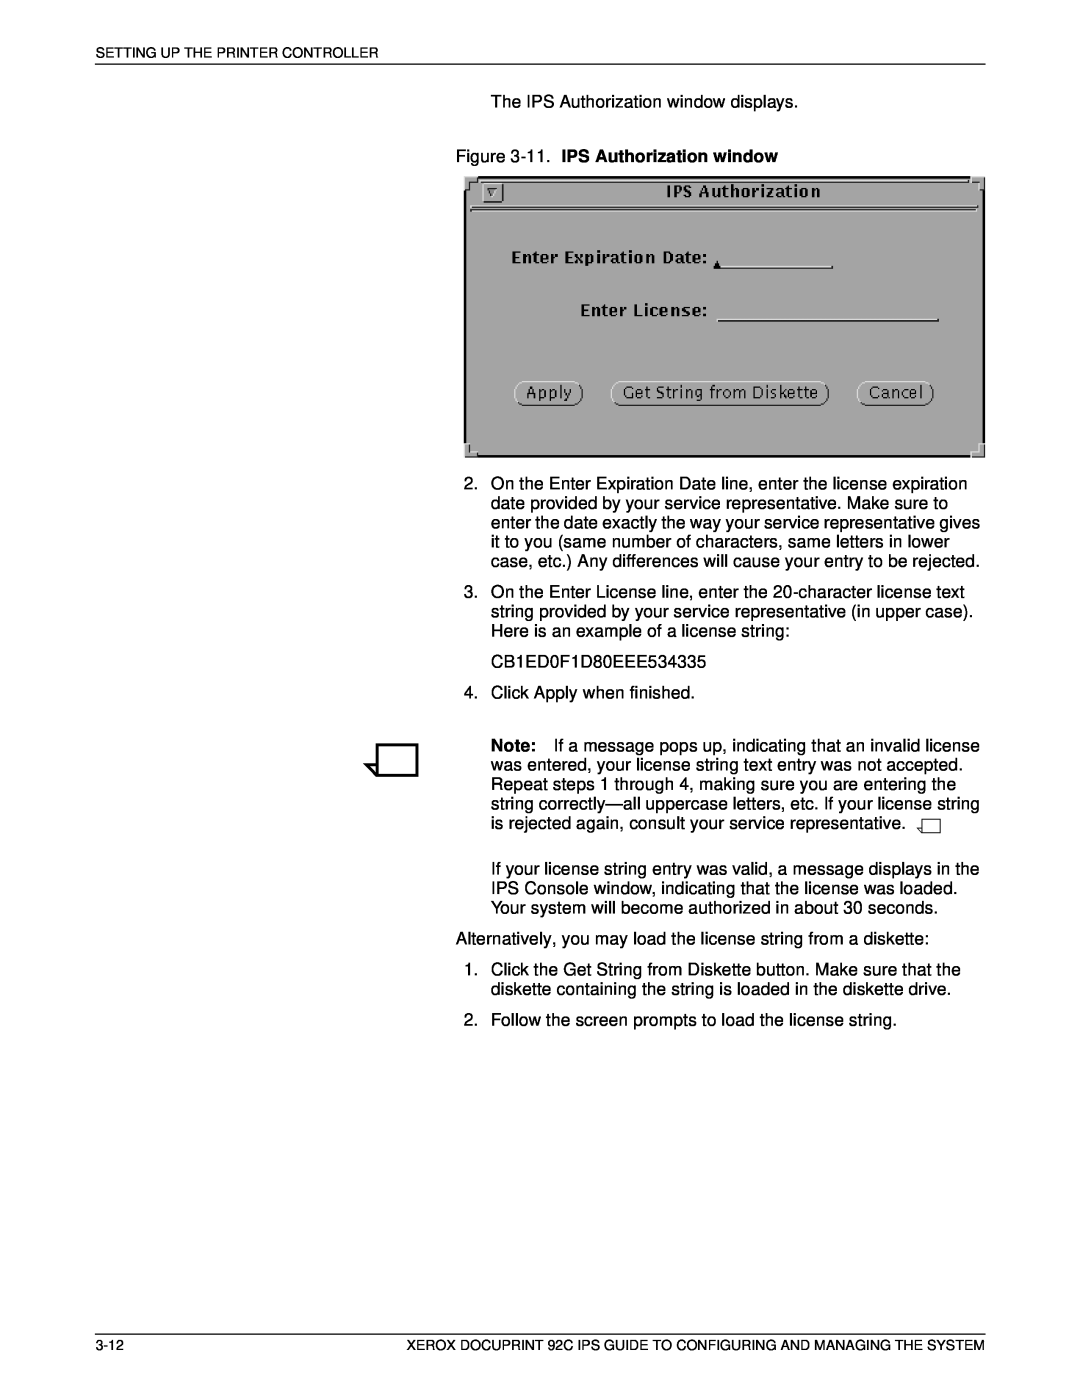 Xerox 92C IPS manual 11. IPS Authorization window 